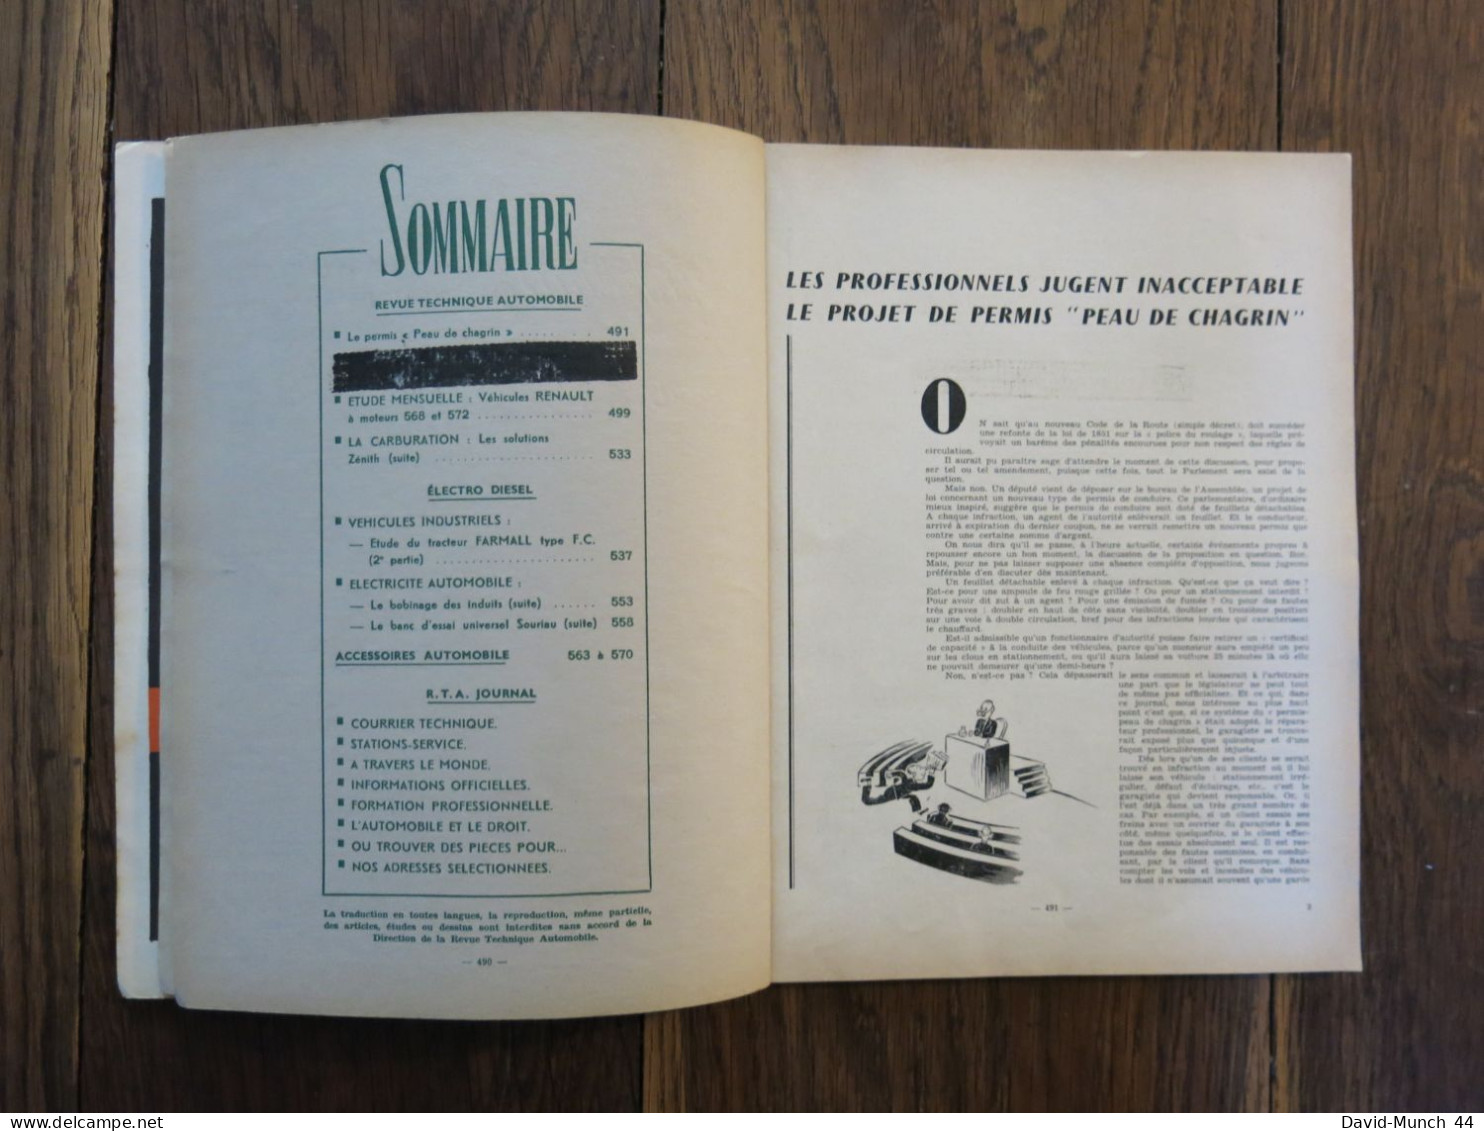 Revue Technique Automobile # 99. Juillet 1954 - Auto/Motorrad